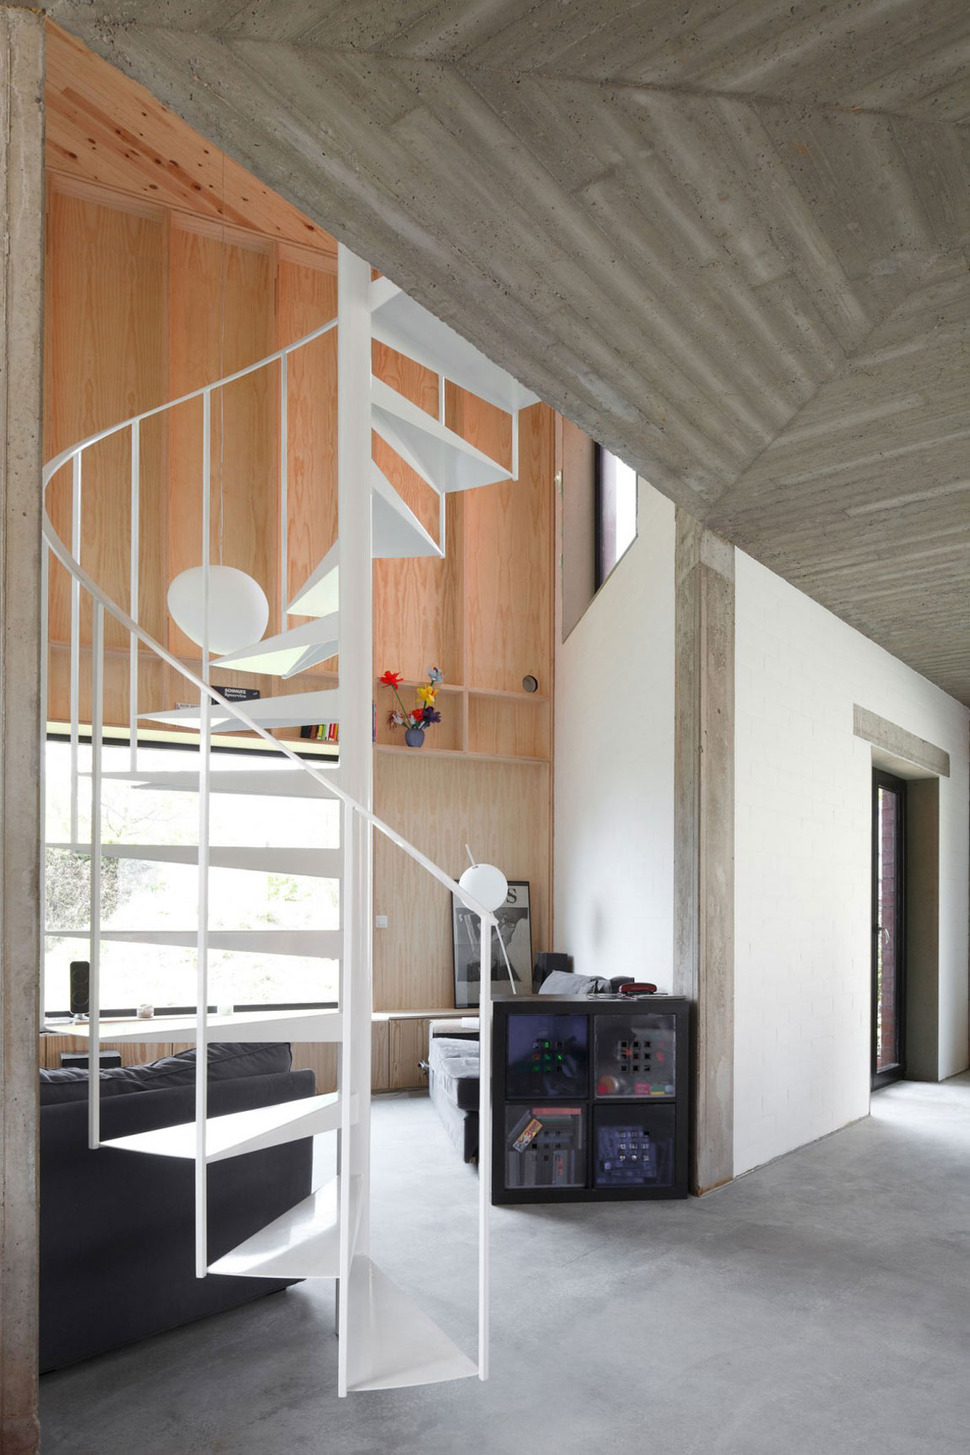 belgium-angle-house-with-concrete-wood-and-brick-interiors-7.jpg